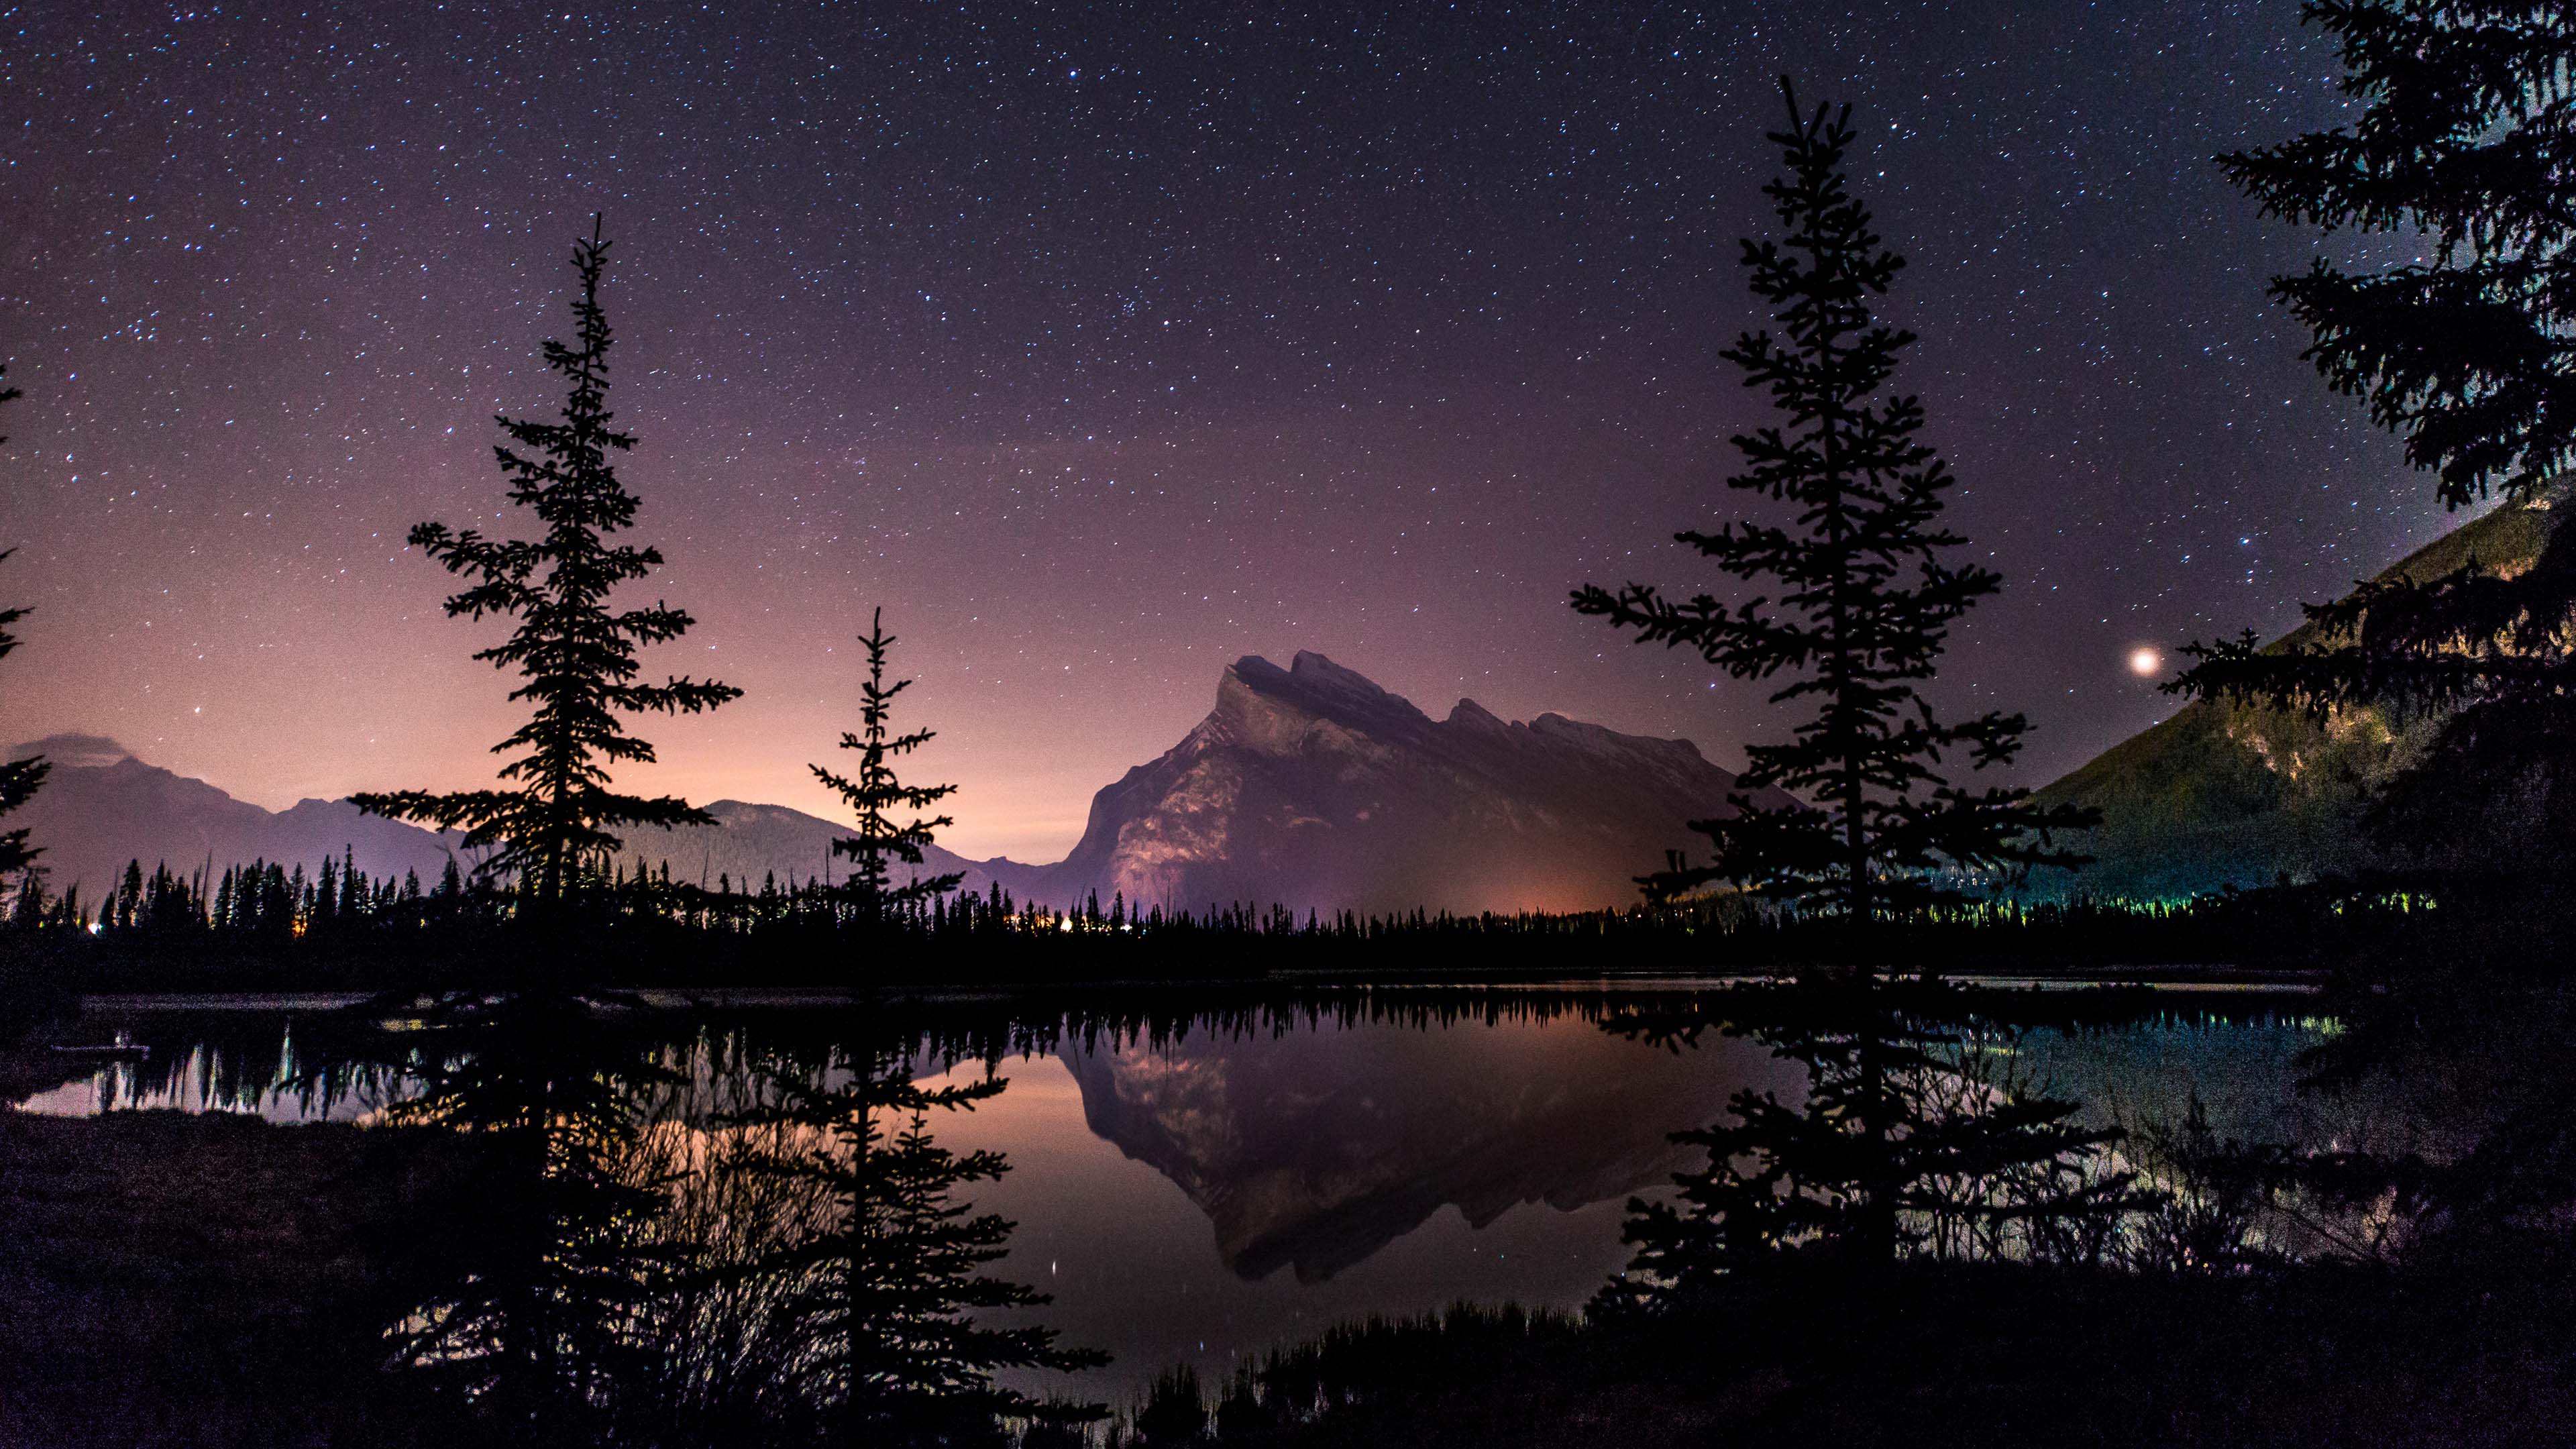 Winter Starry Sky over Lake Night Landscape Wallpaper Hd : 